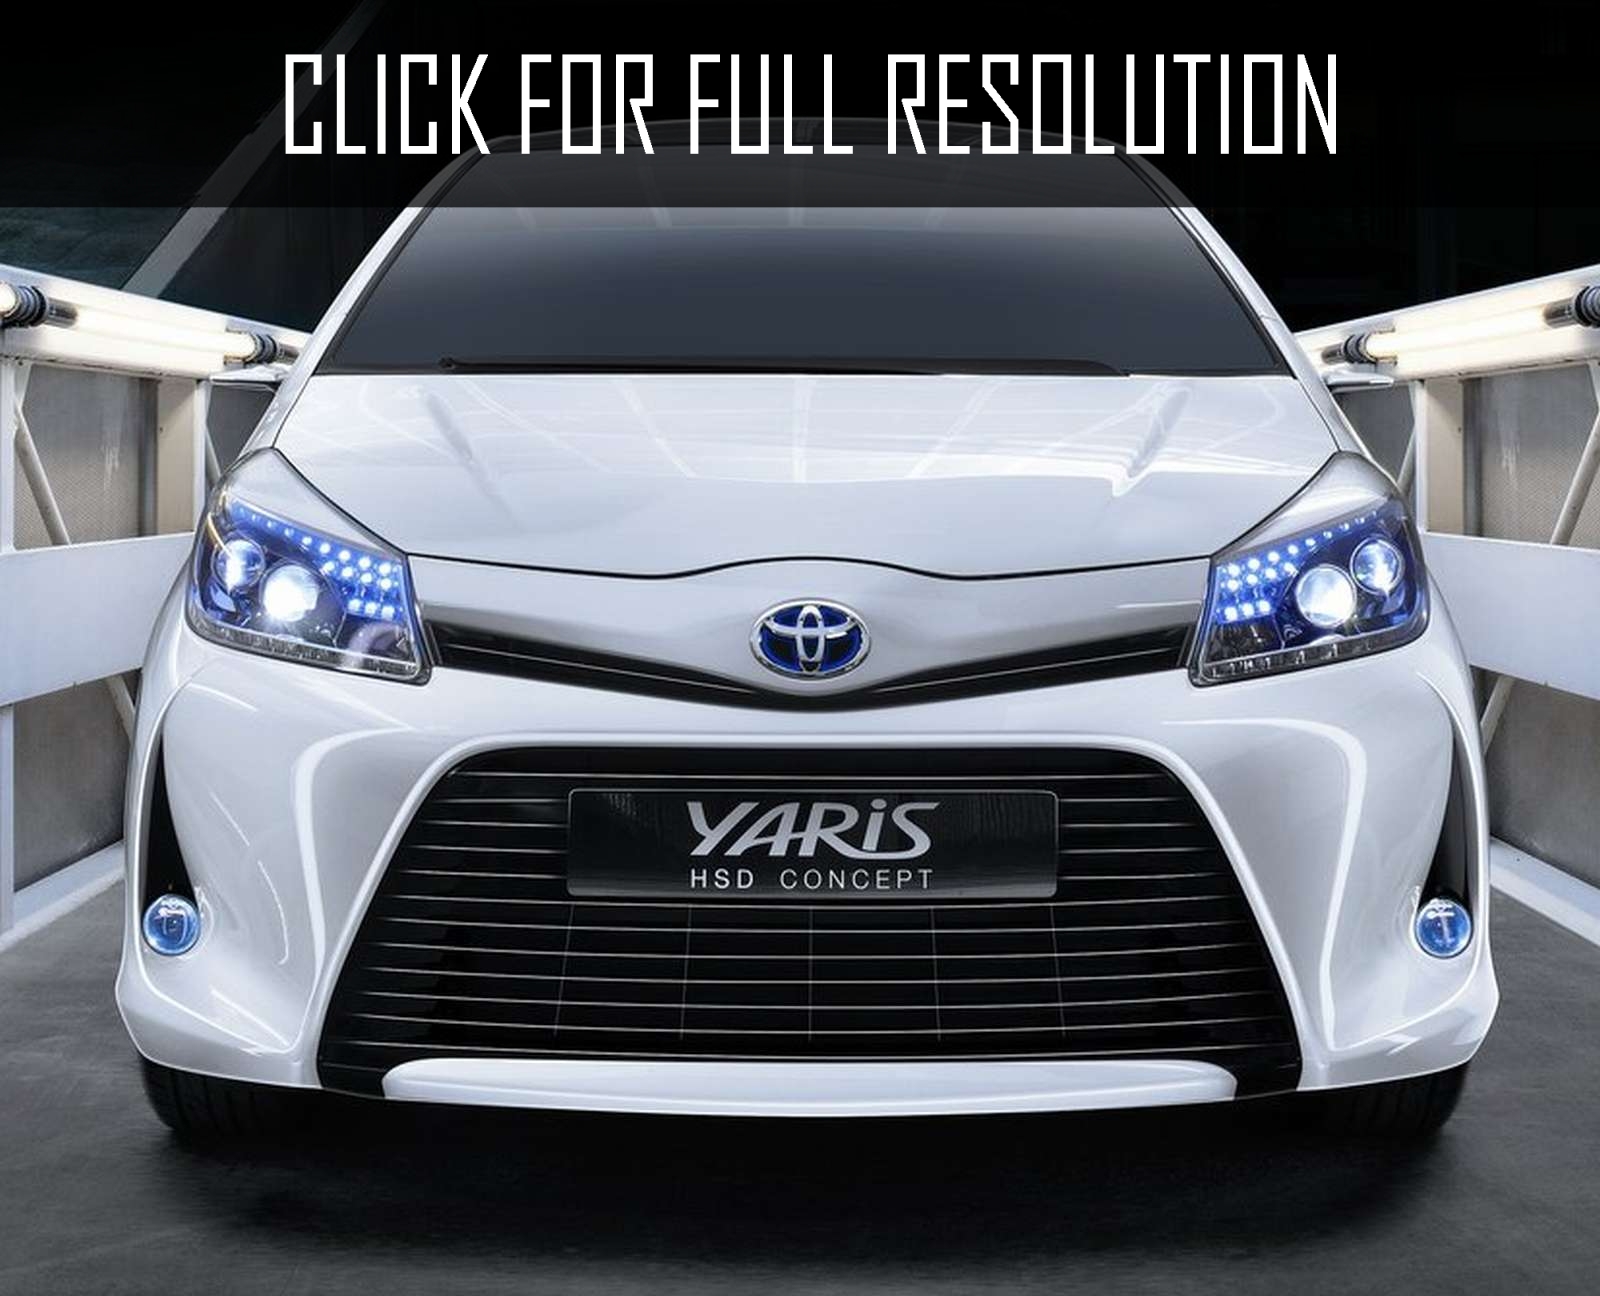 Toyota Yaris Hsd